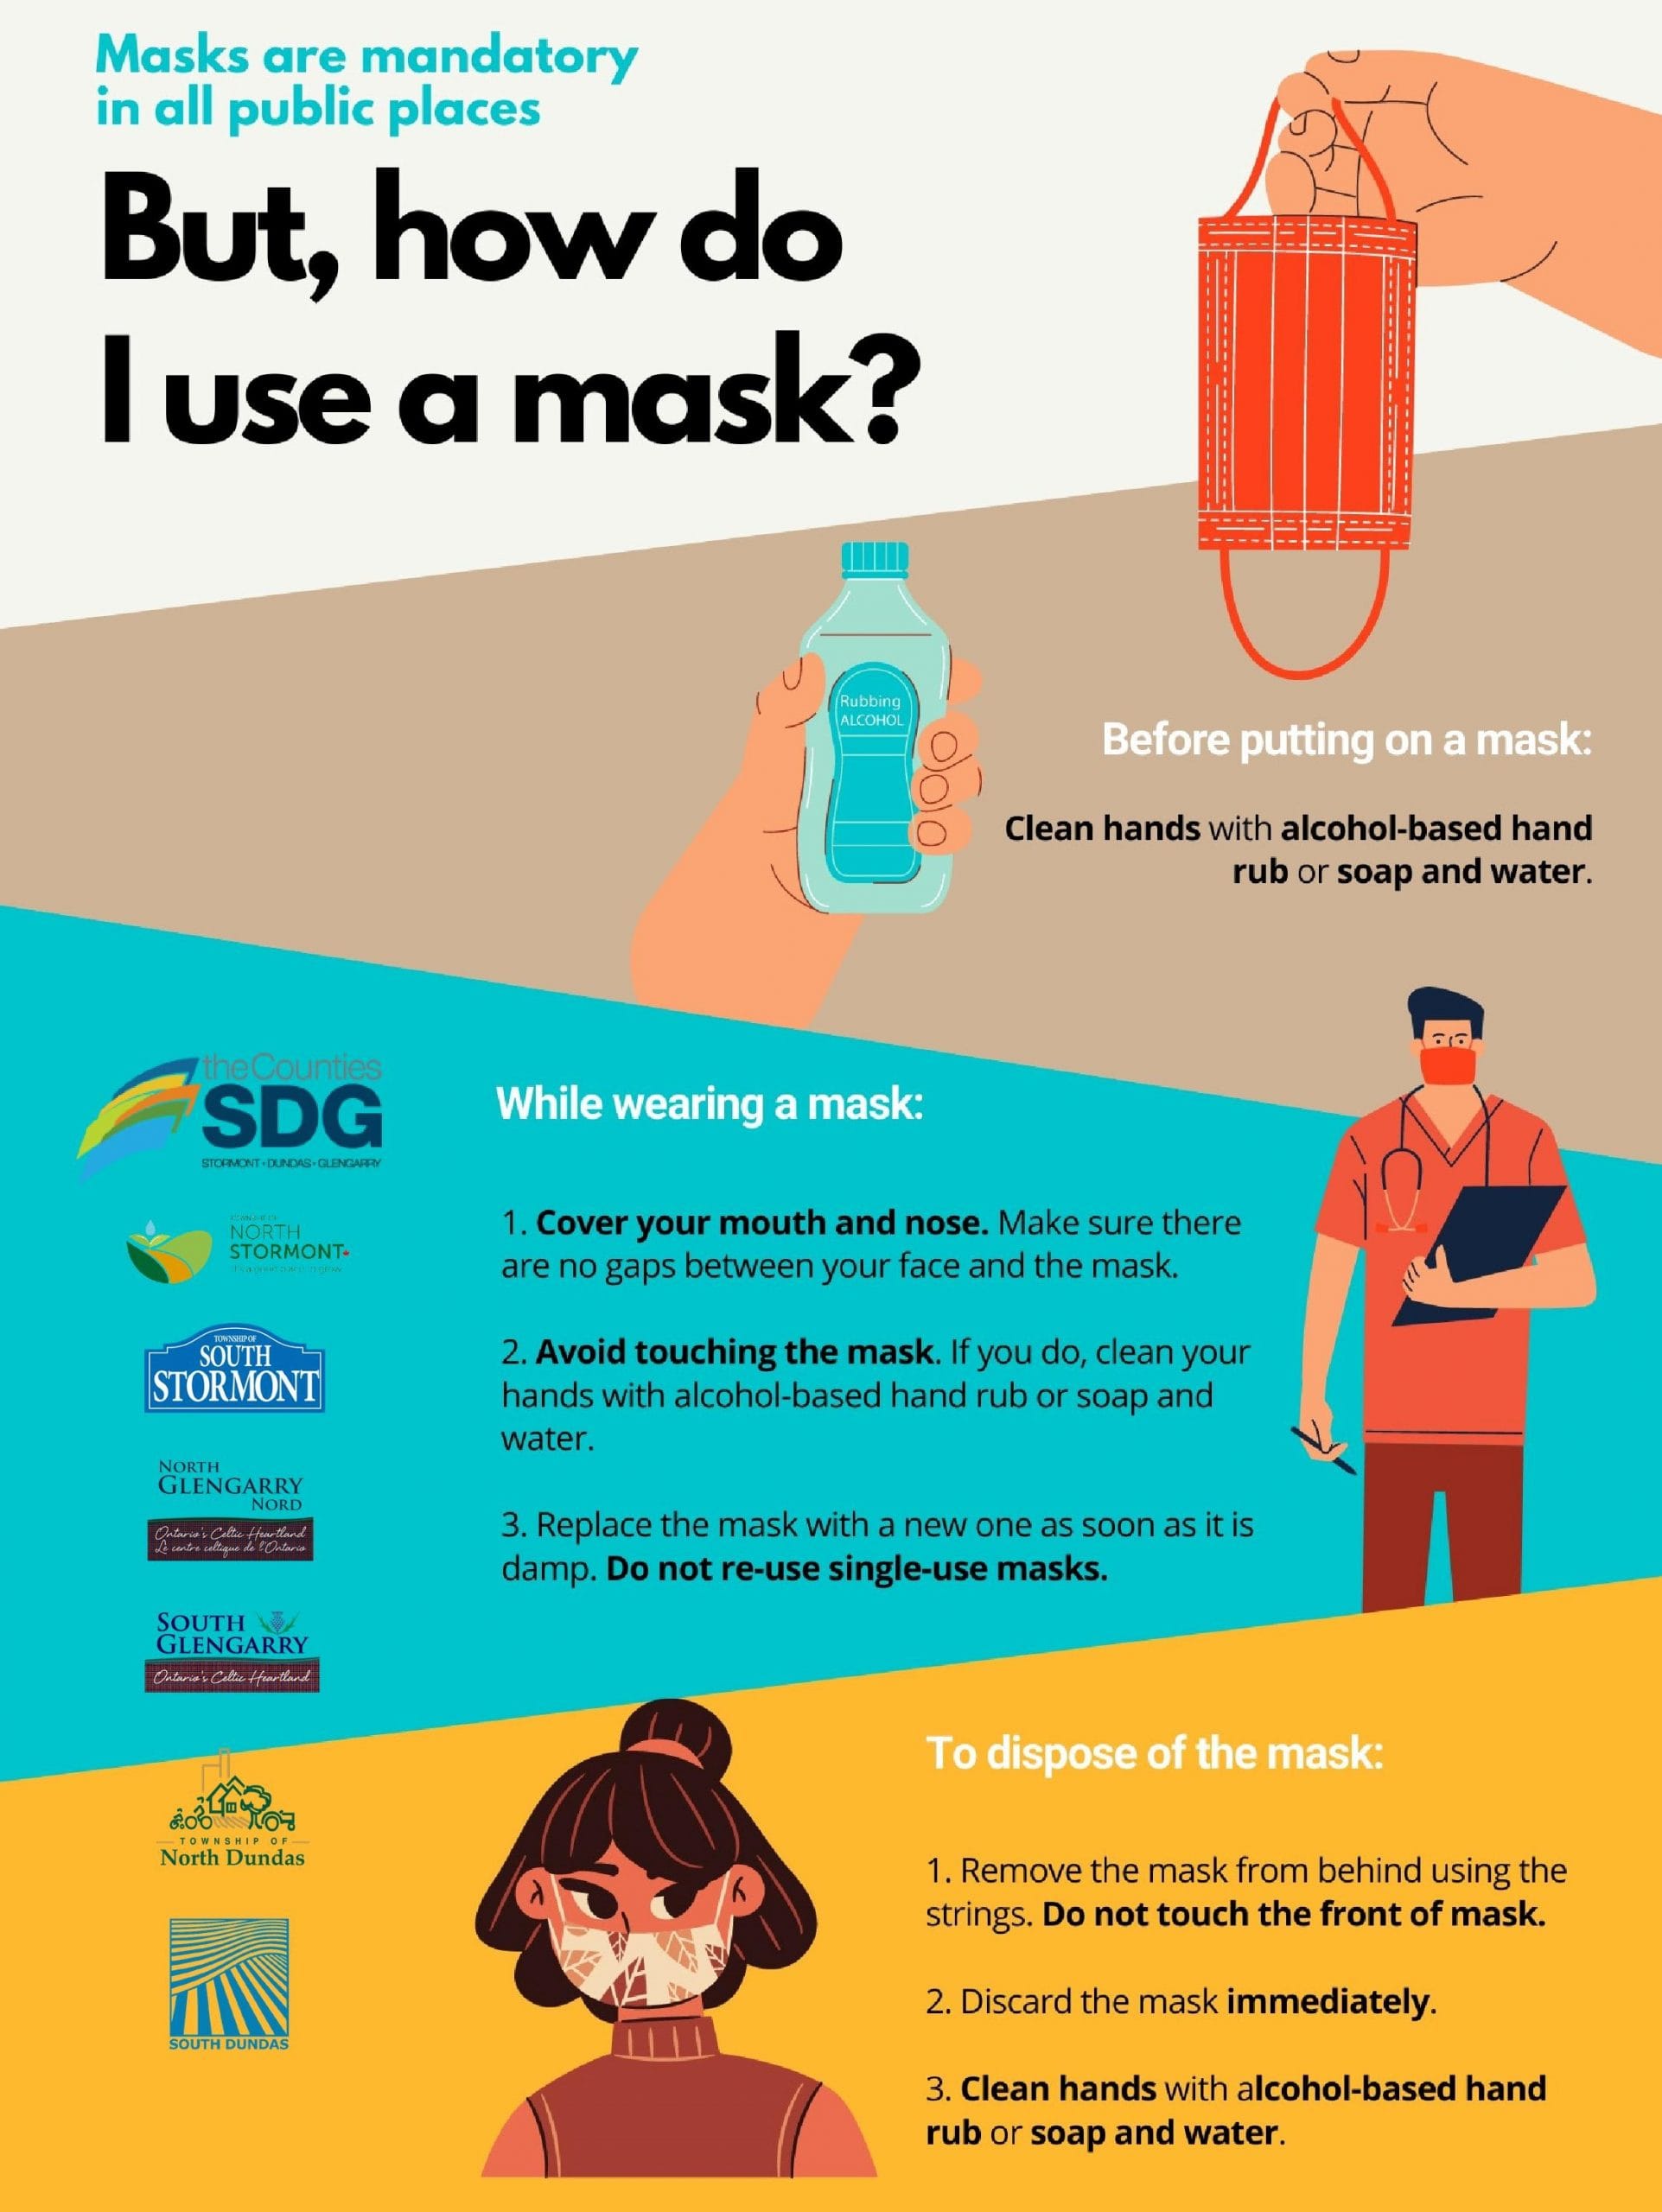 Proper Mask Usage and Procedures